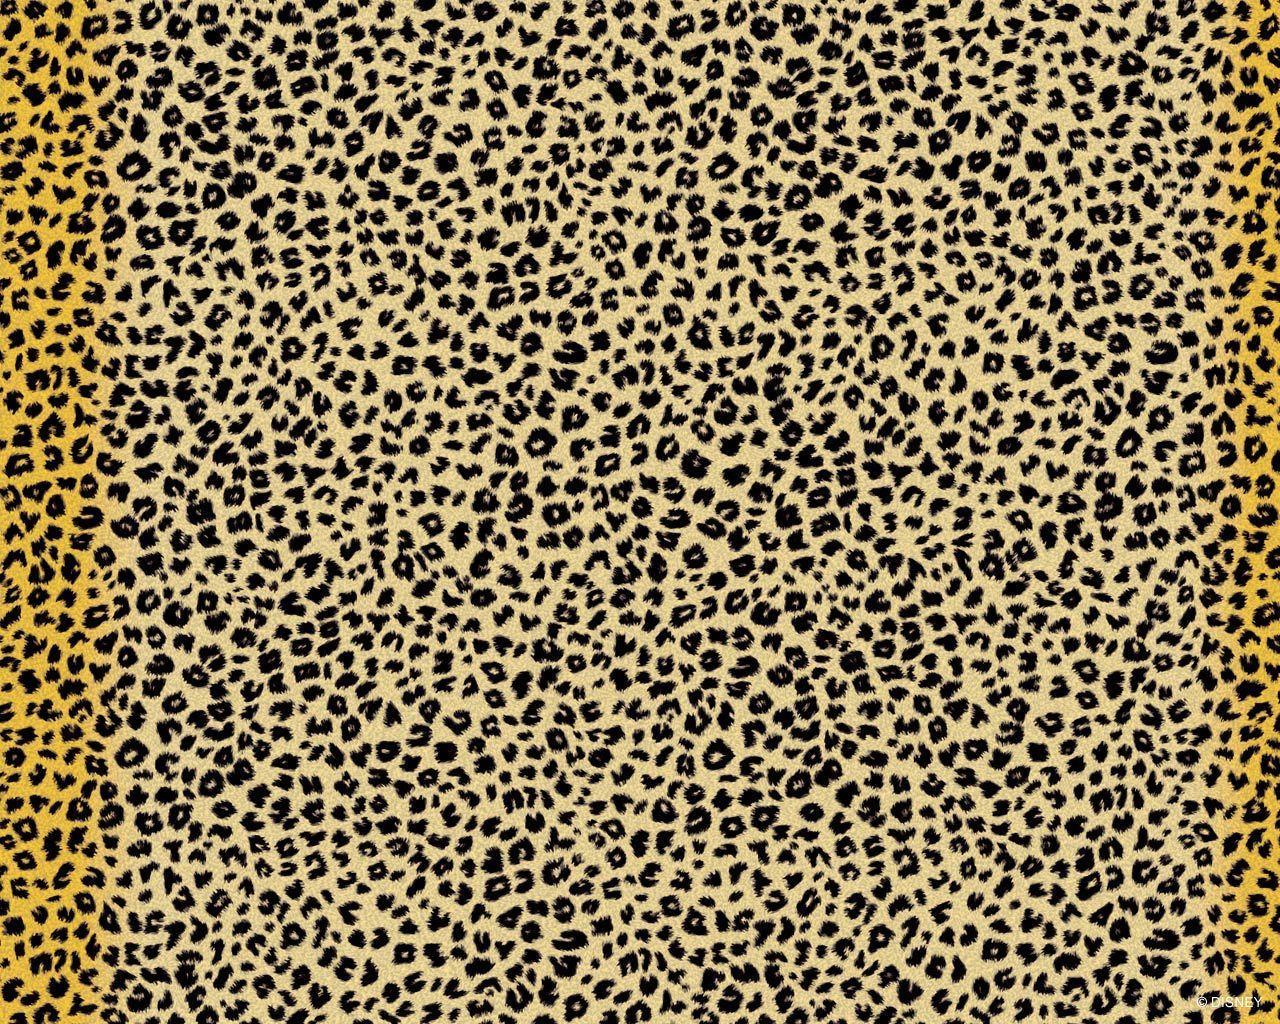 cheetah - The Cheetah Girls Wallpaper (18676839) - Fanpop